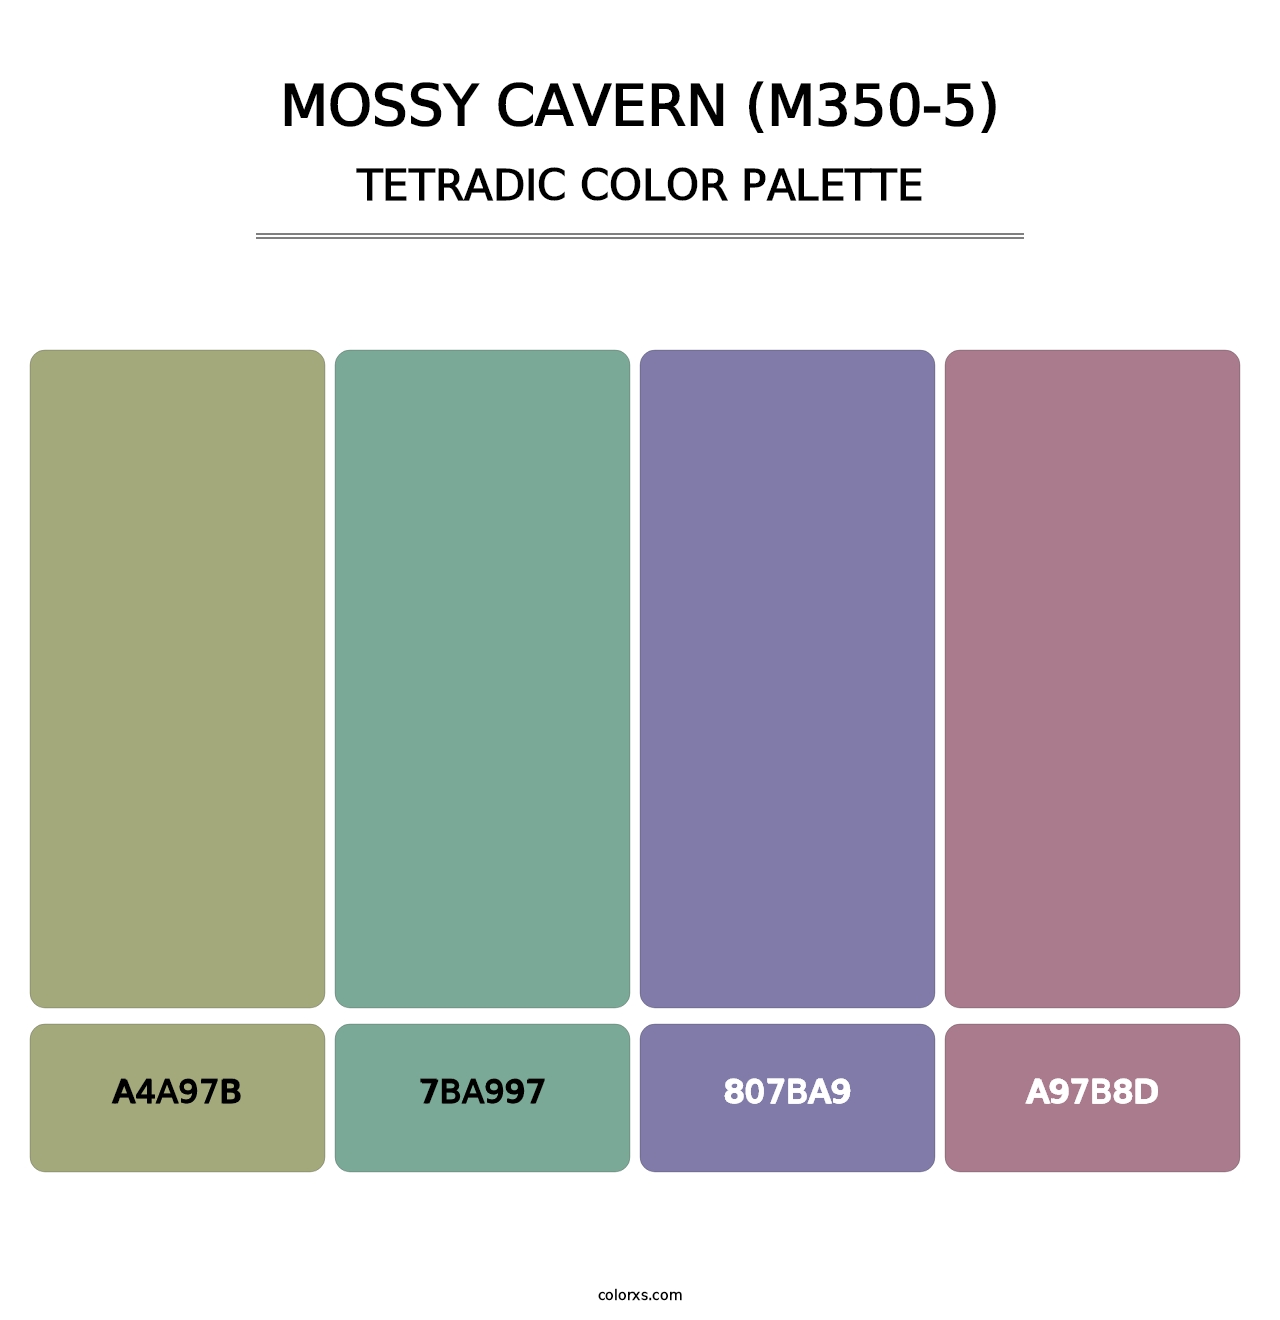 Mossy Cavern (M350-5) - Tetradic Color Palette